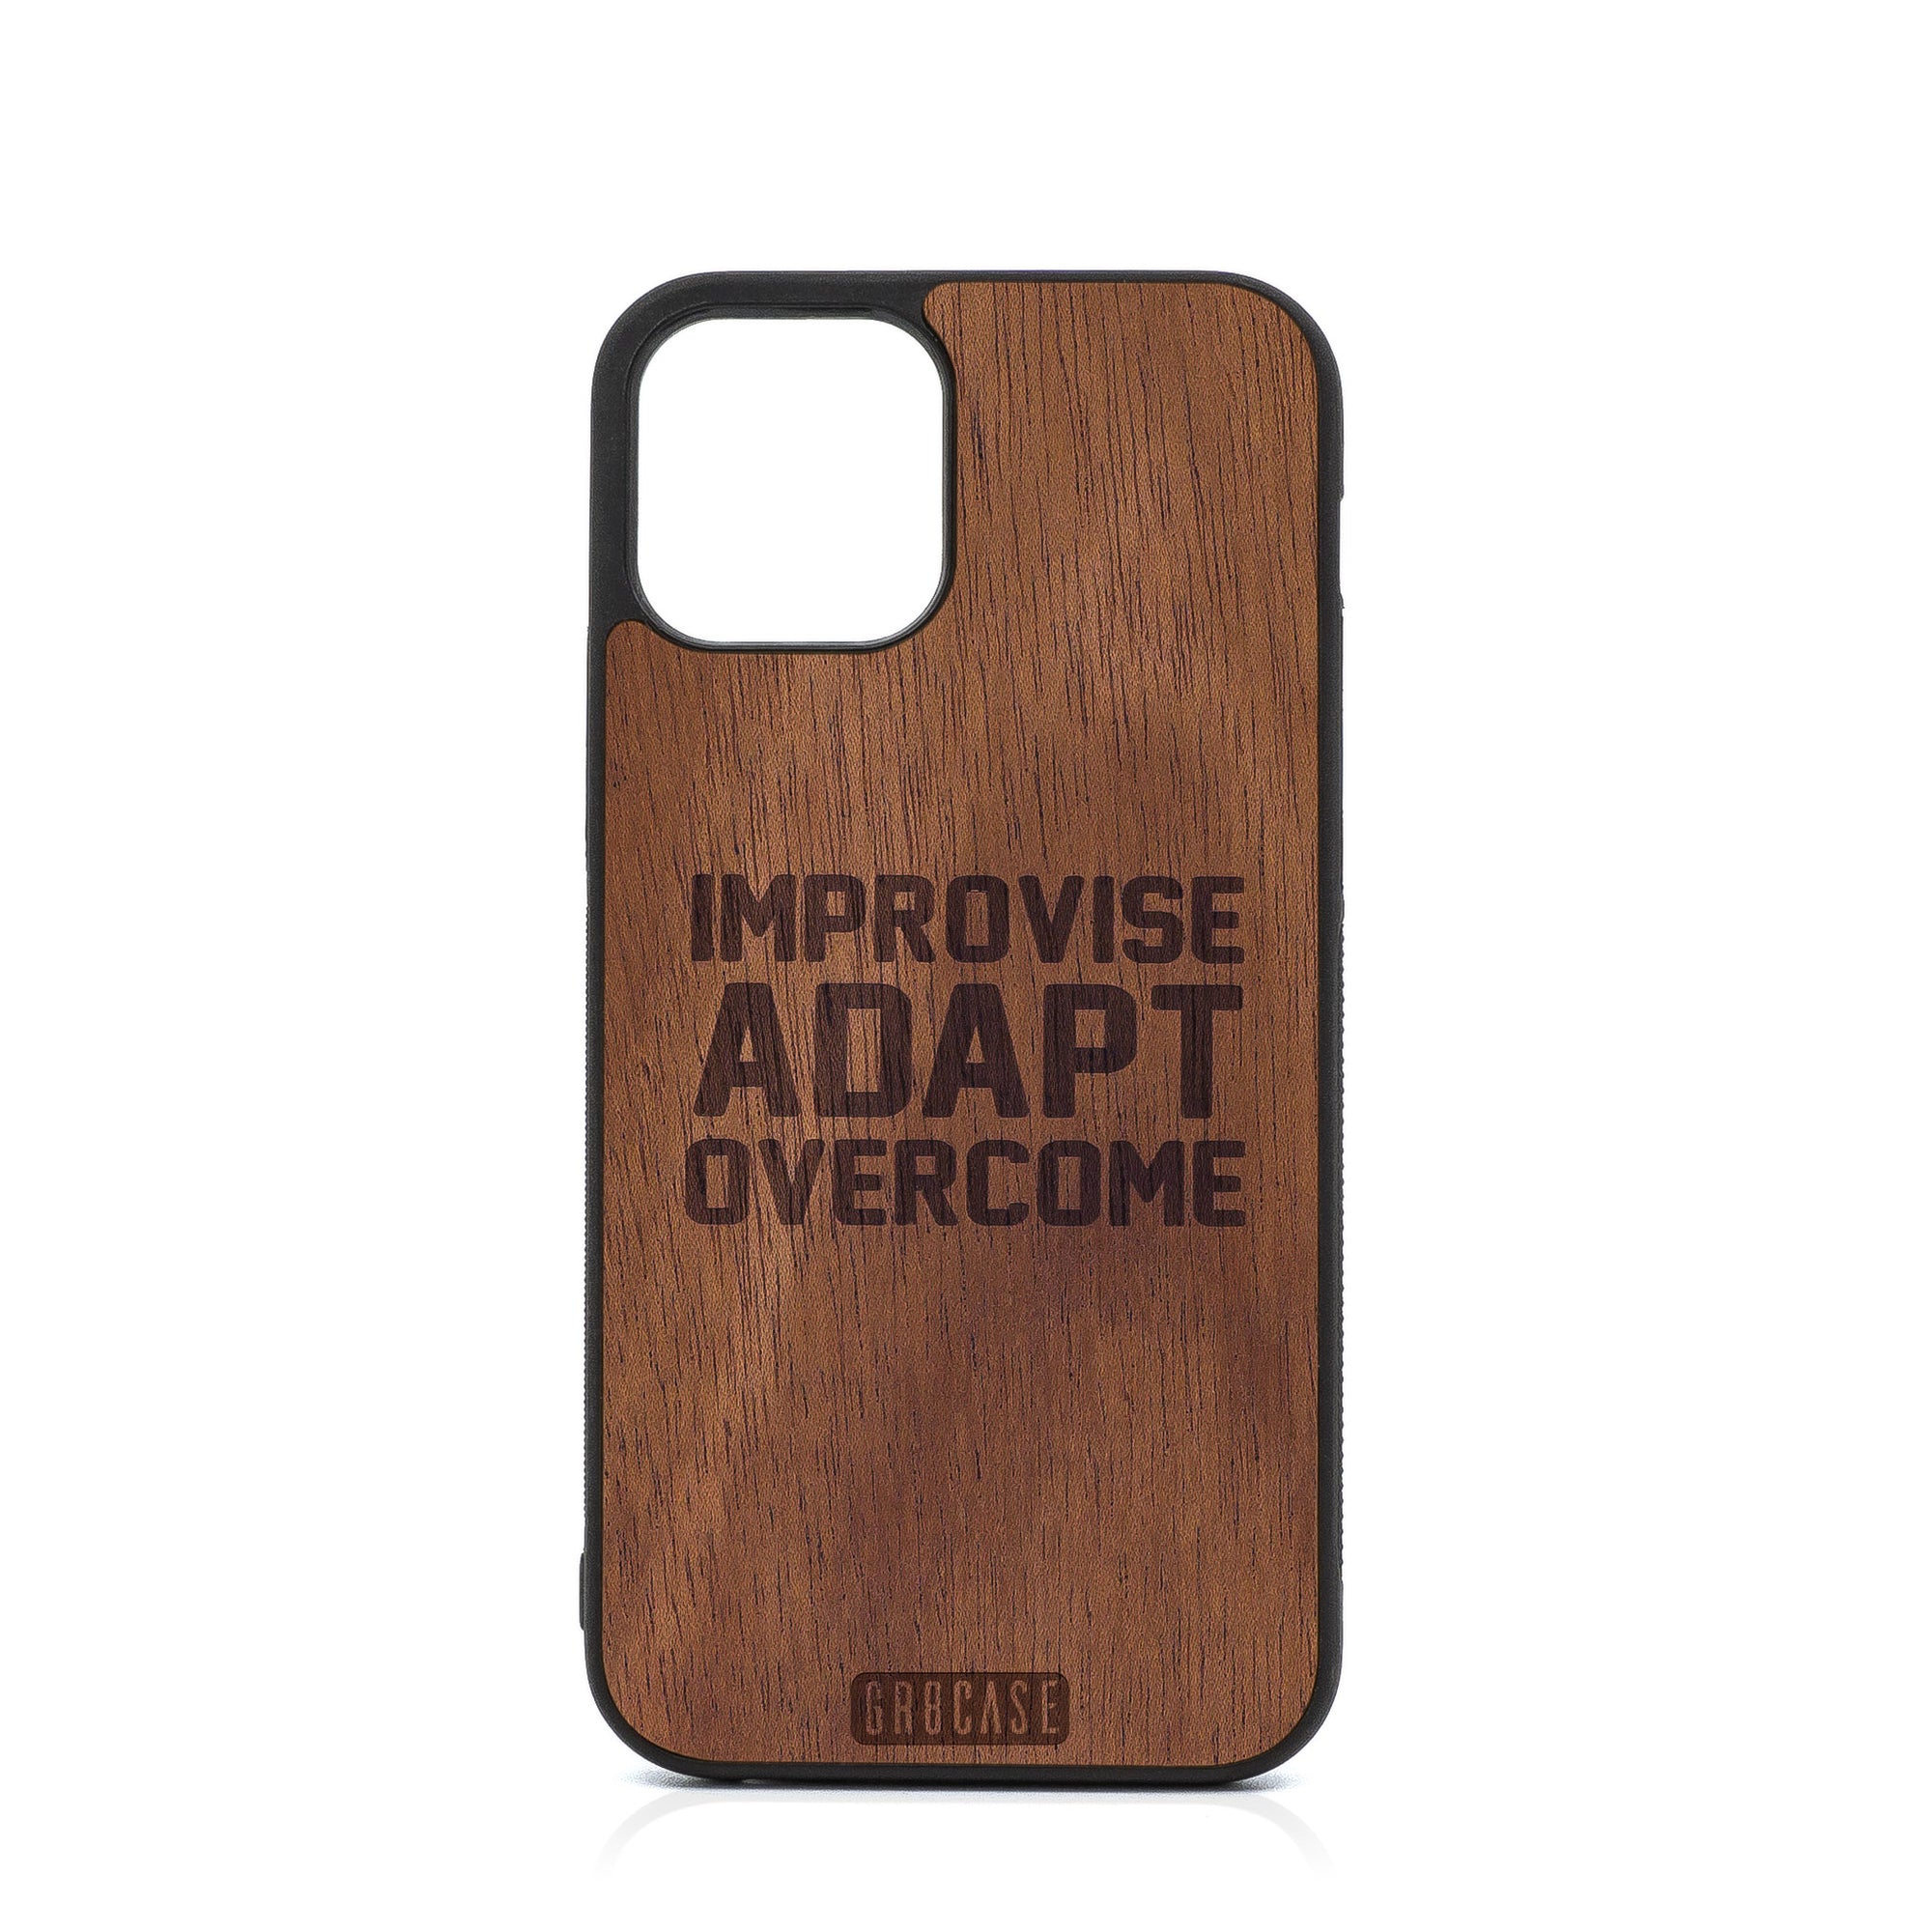 Improvise Adapt Overcome Design Wood Case For iPhone 12